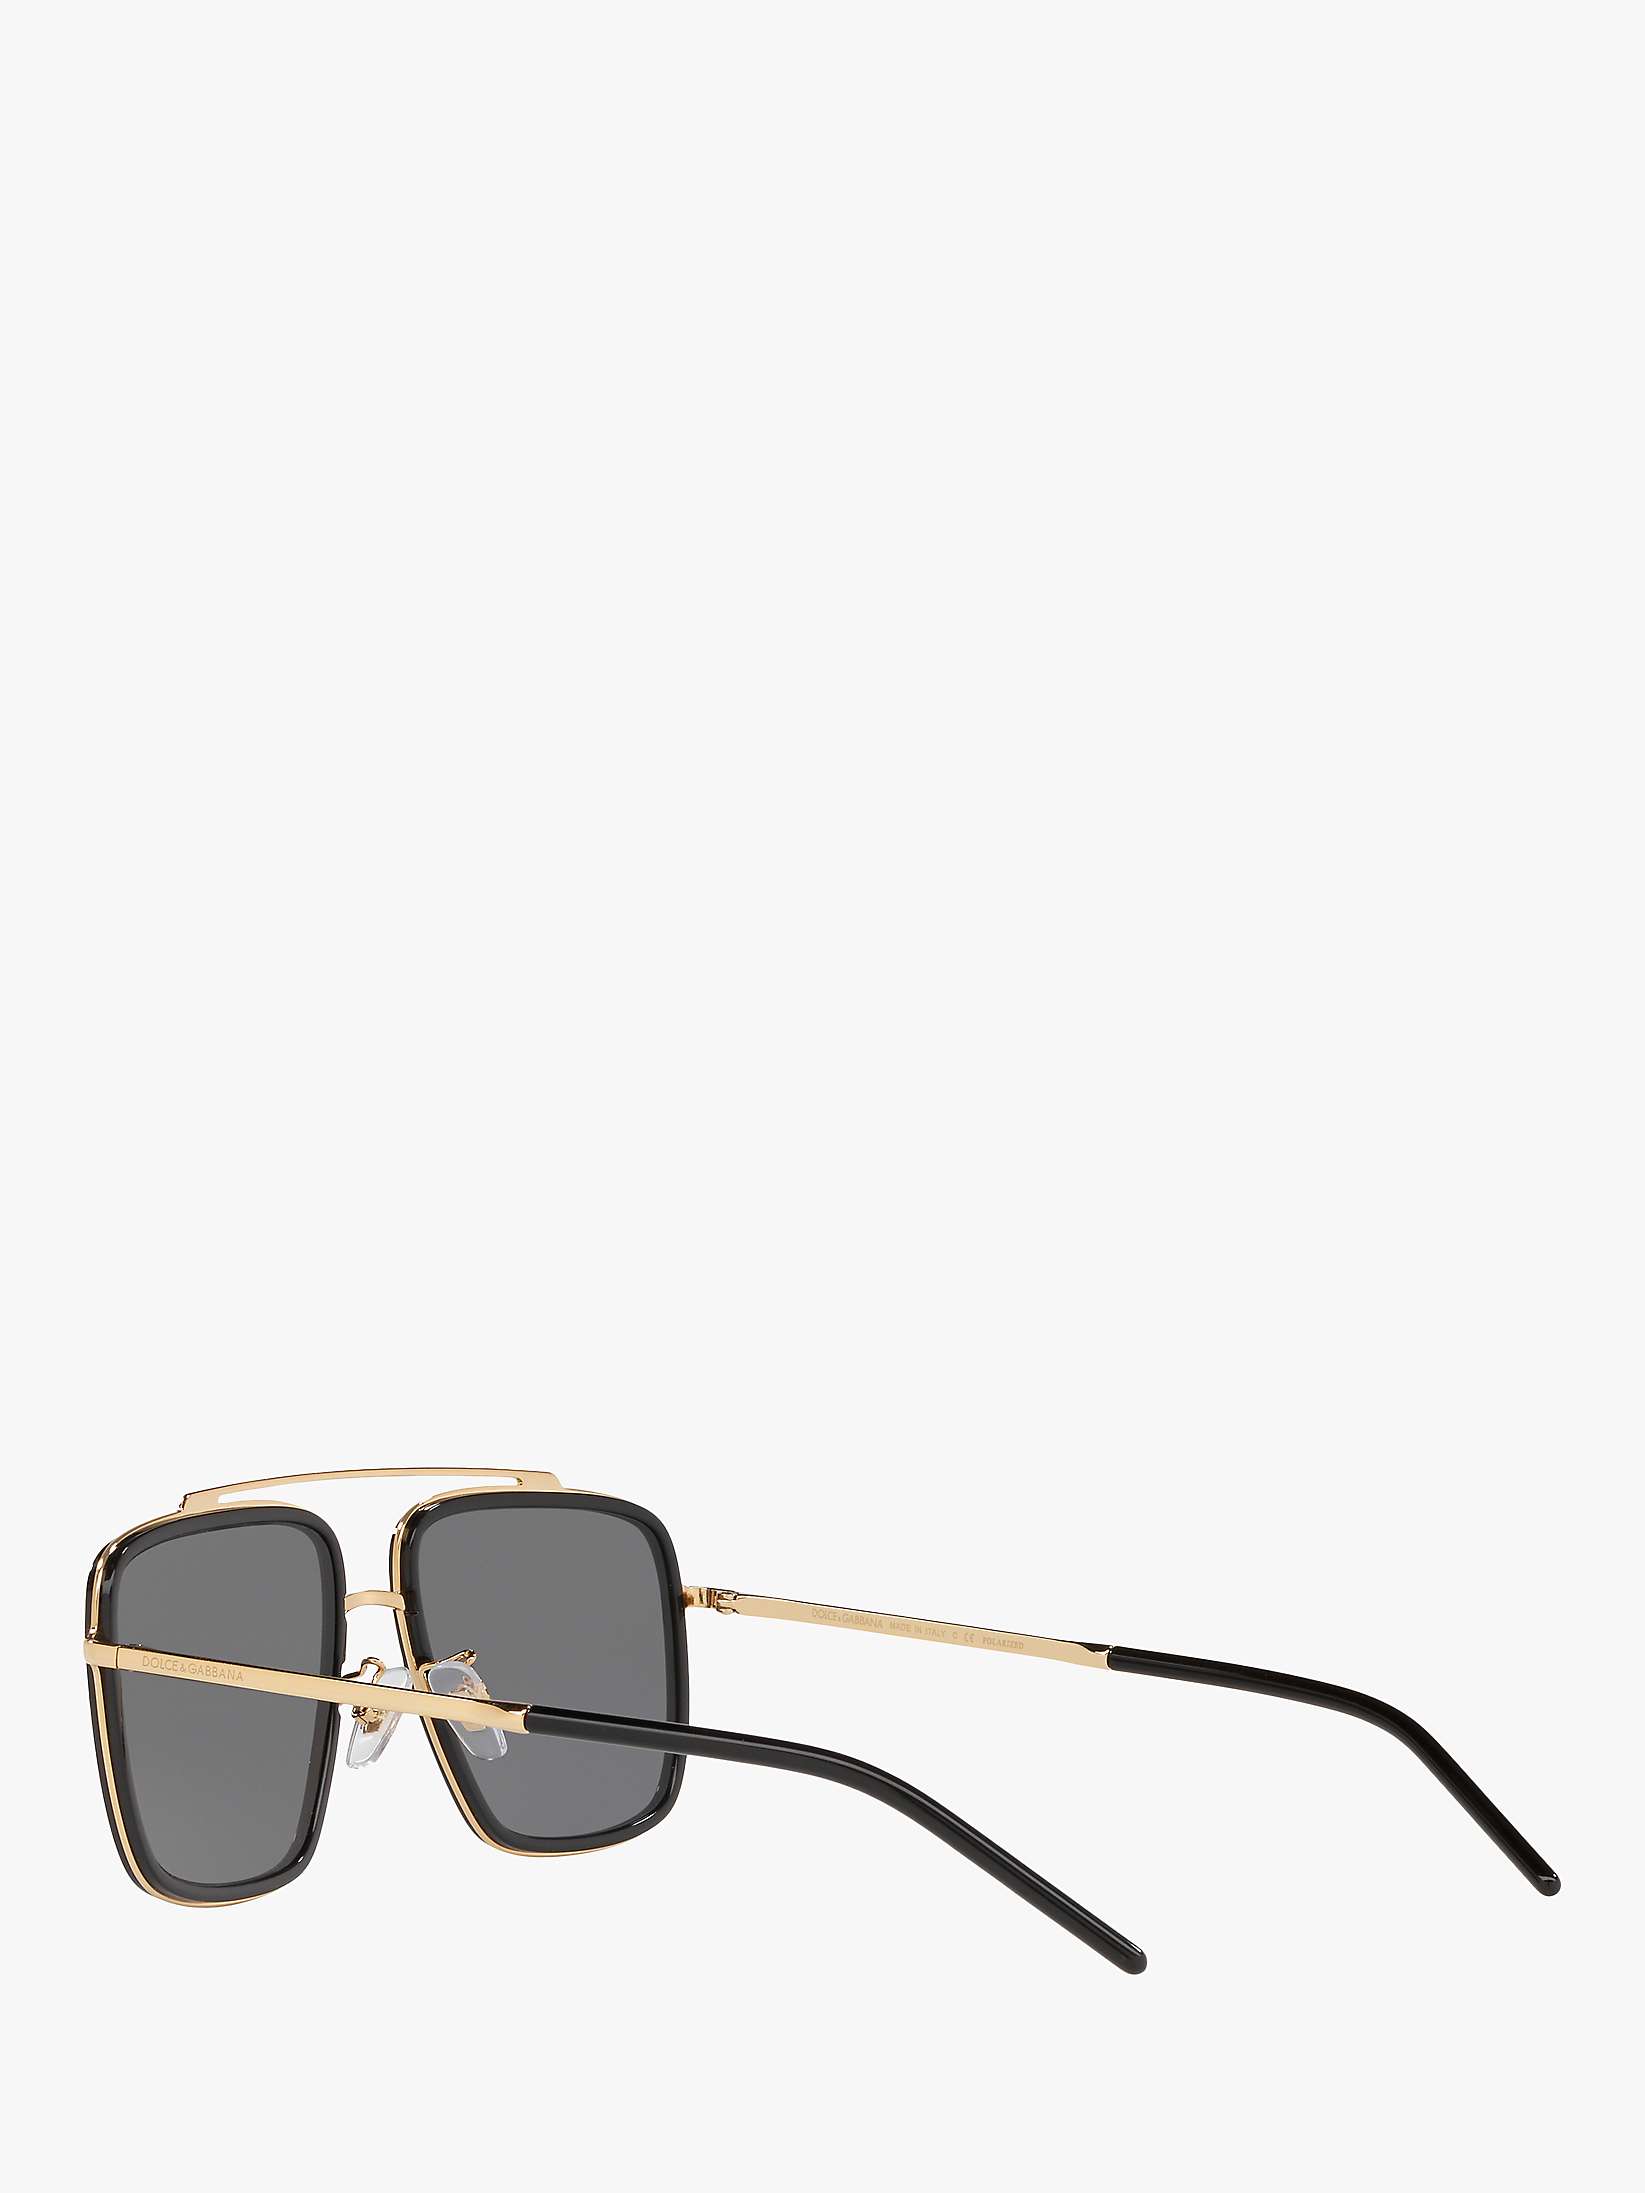 Buy Dolce & Gabbana DG2220 Men's Polarised Square Sunglasses, Gold/Black Online at johnlewis.com